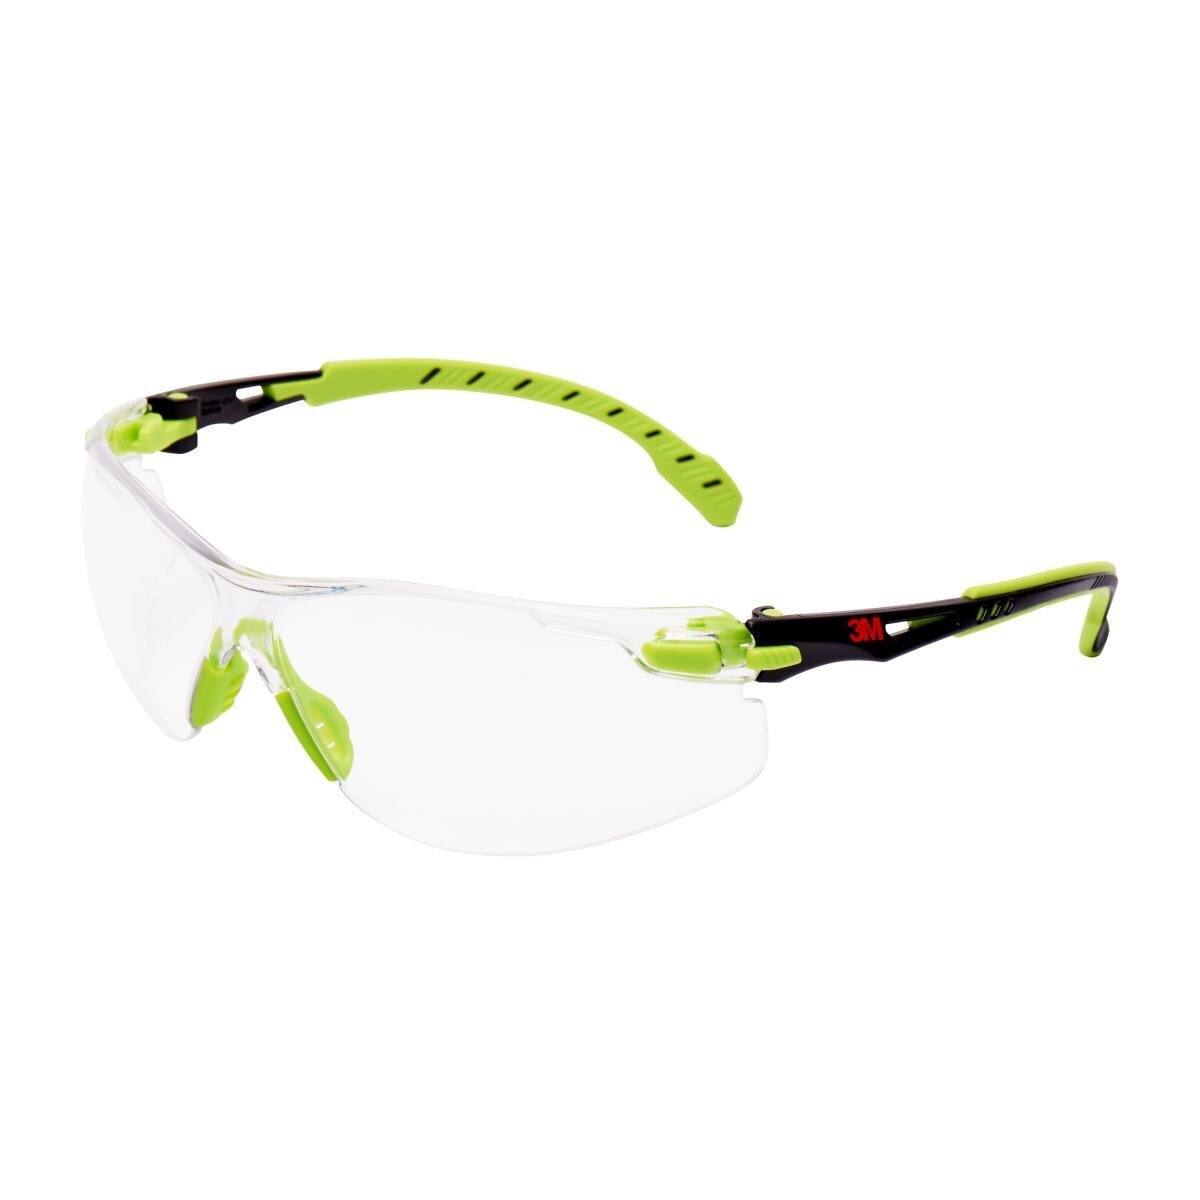 occhiali di sicurezza 3M Solus 1000, aste verdi/nere, rivestimento Scotchgard antiappannamento/antigraffio (K&amp;N), lente chiara, S1201SGAF-EU